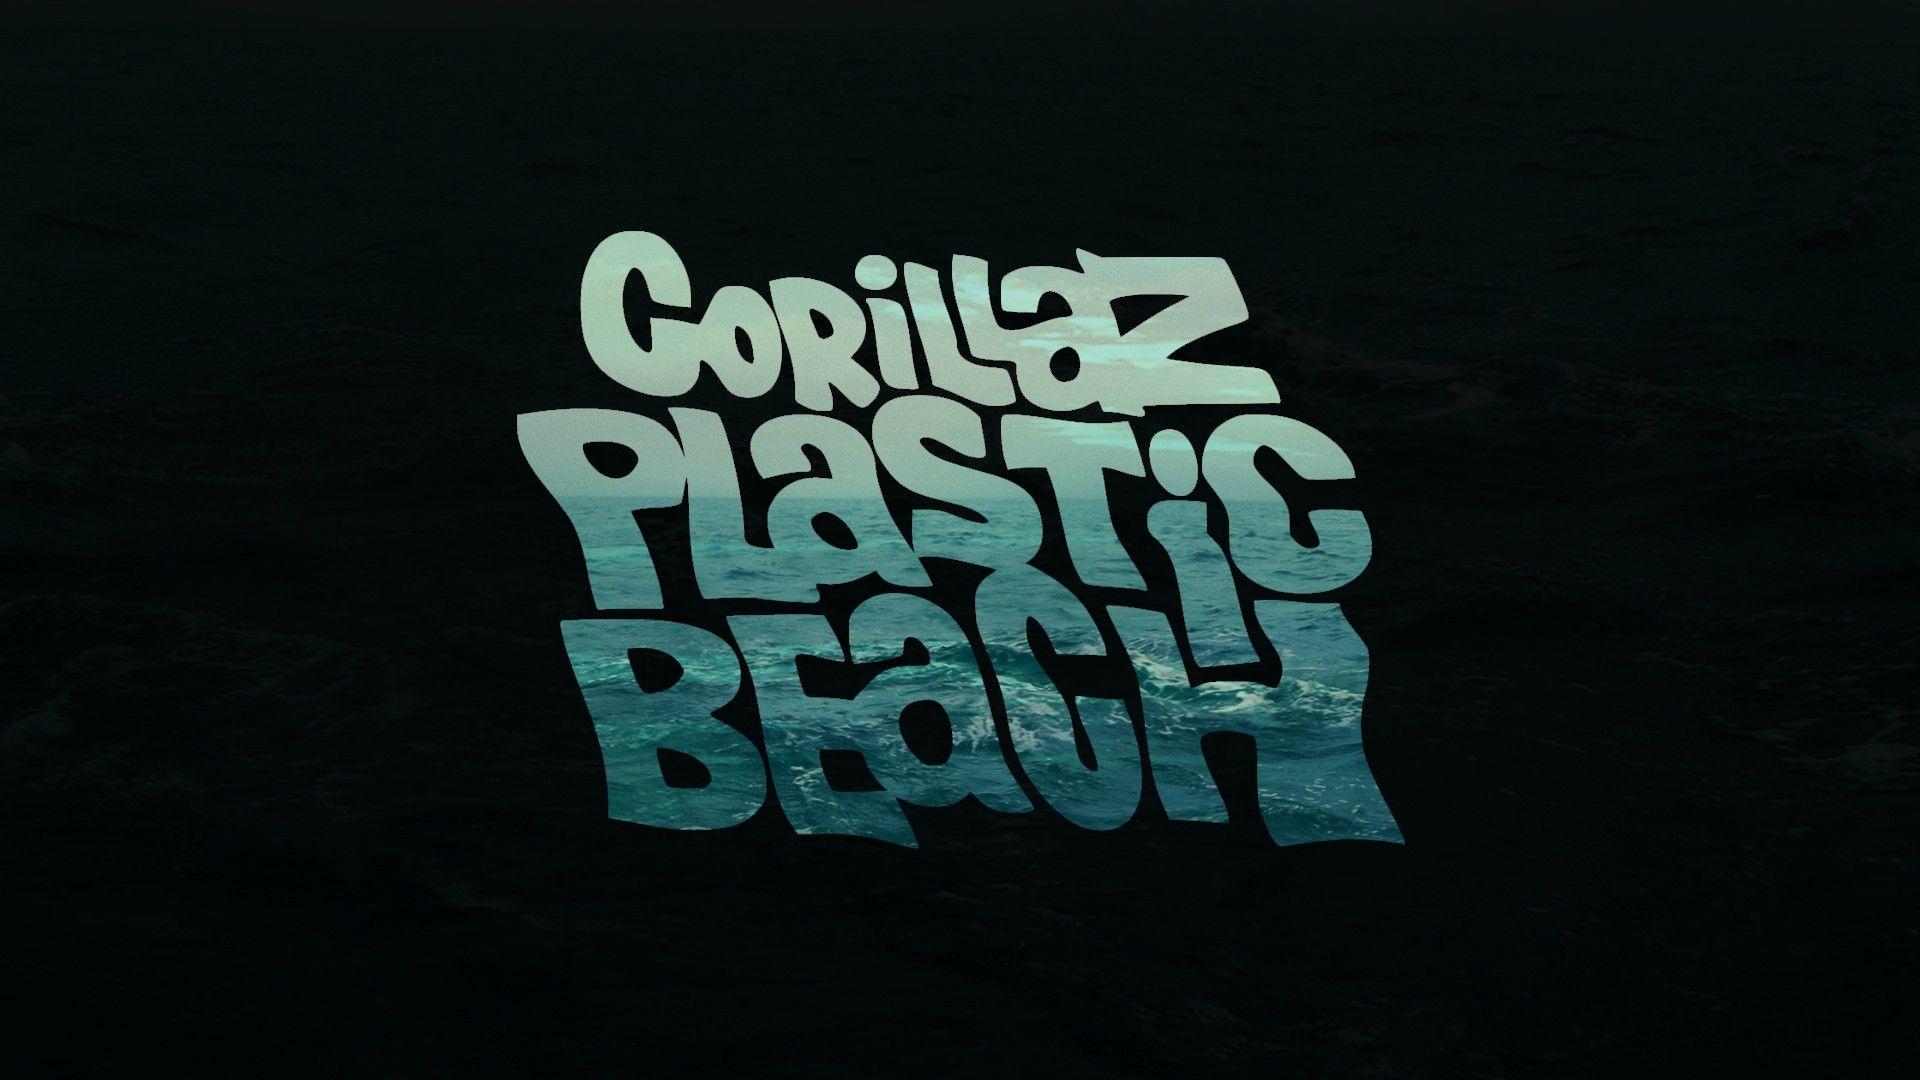 Gorillaz Plastic Beach Cover wallpaper